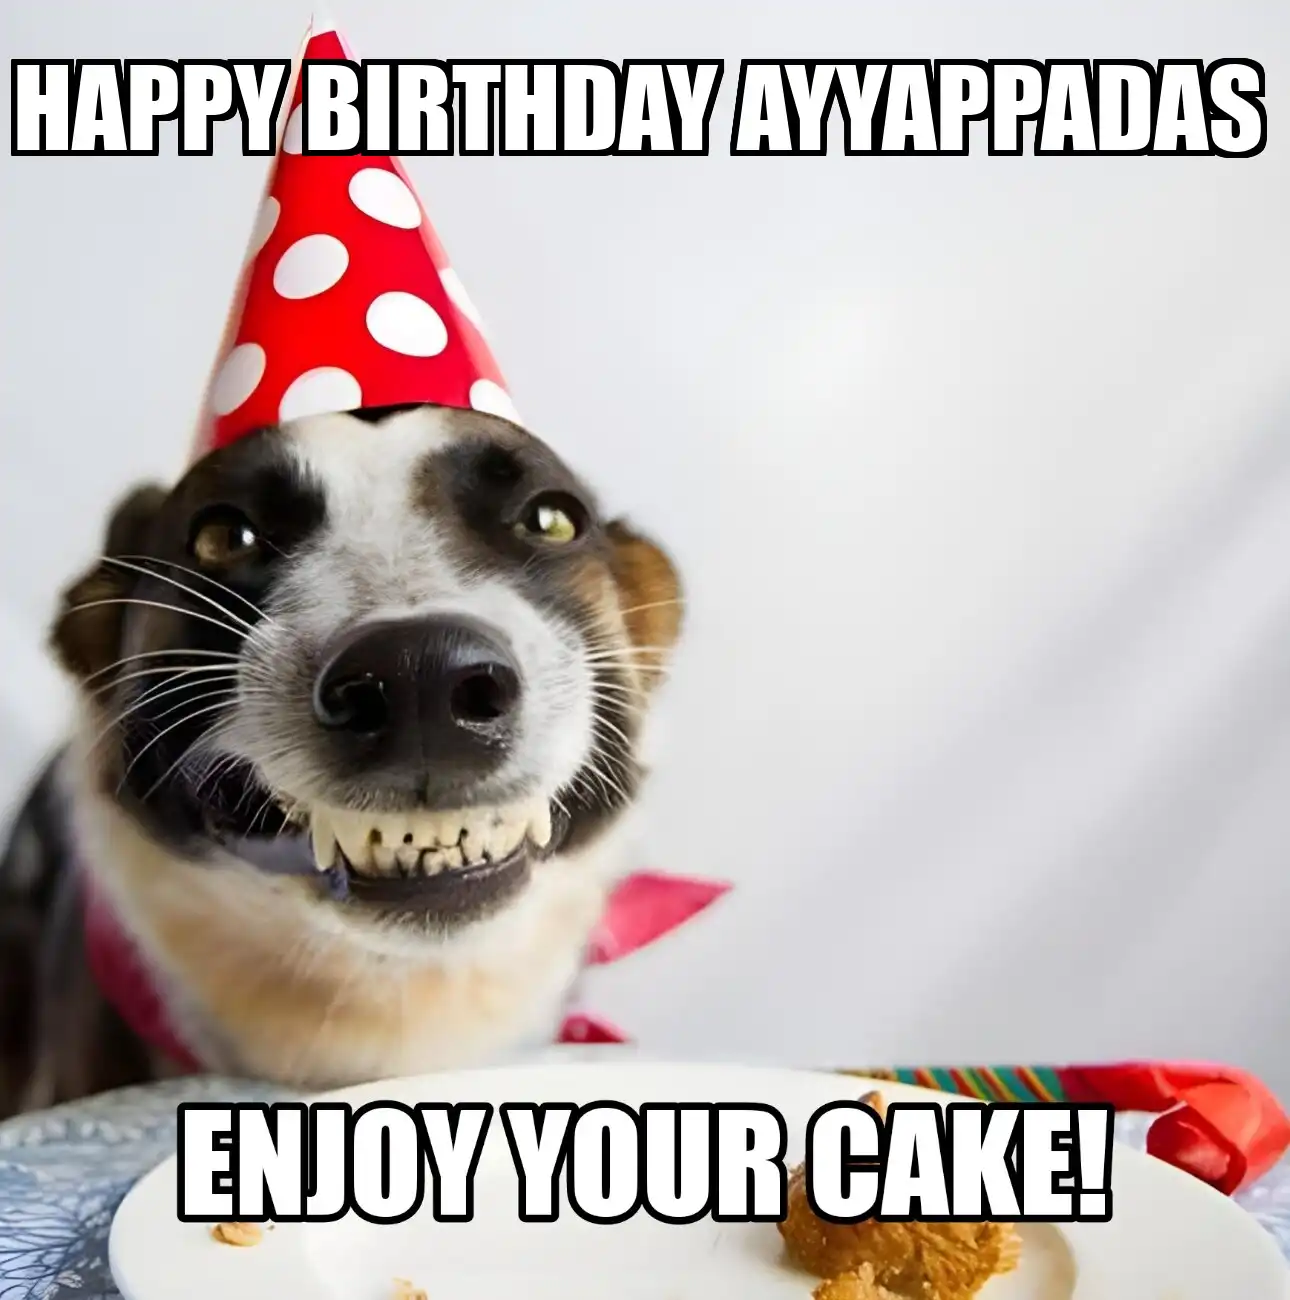 Happy Birthday Ayyappadas Enjoy Your Cake Dog Meme